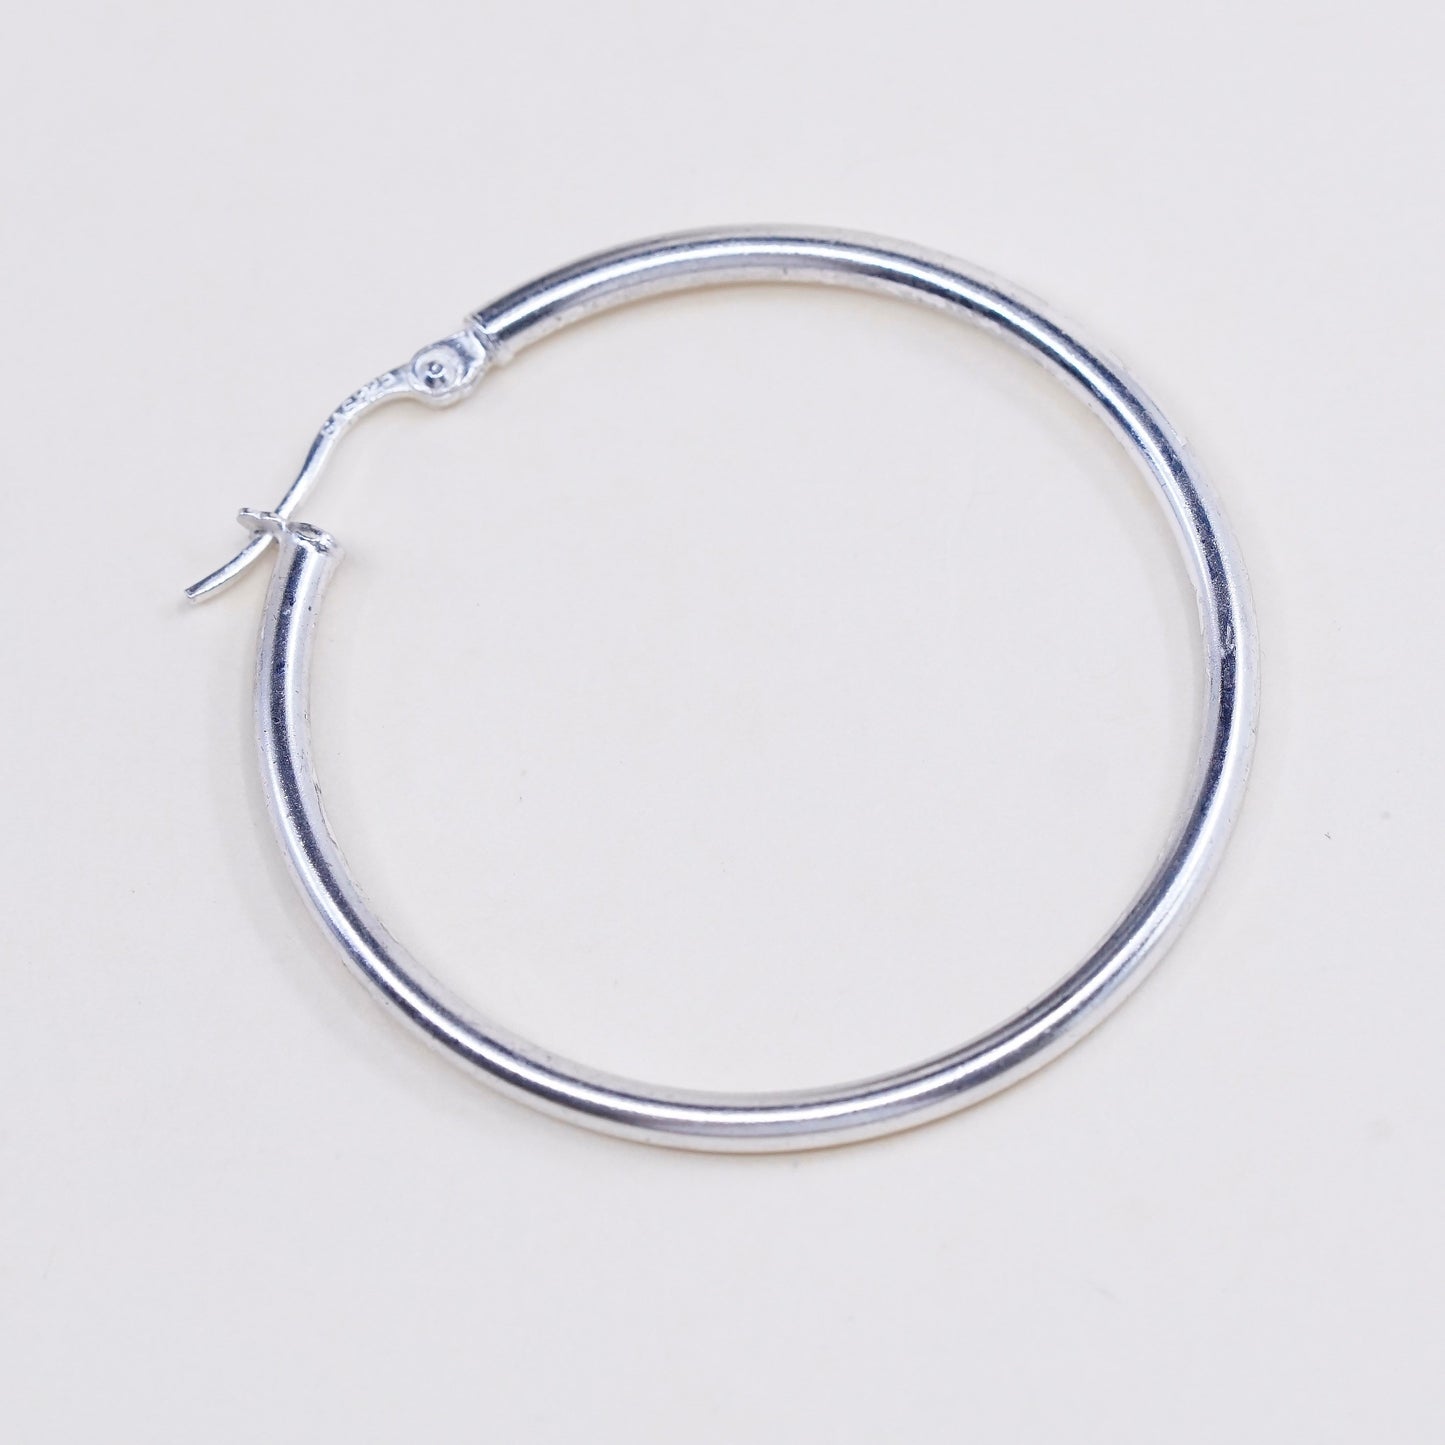 1.25", vtg sterling silver loop earrings, fashion minimalist primitive hoops